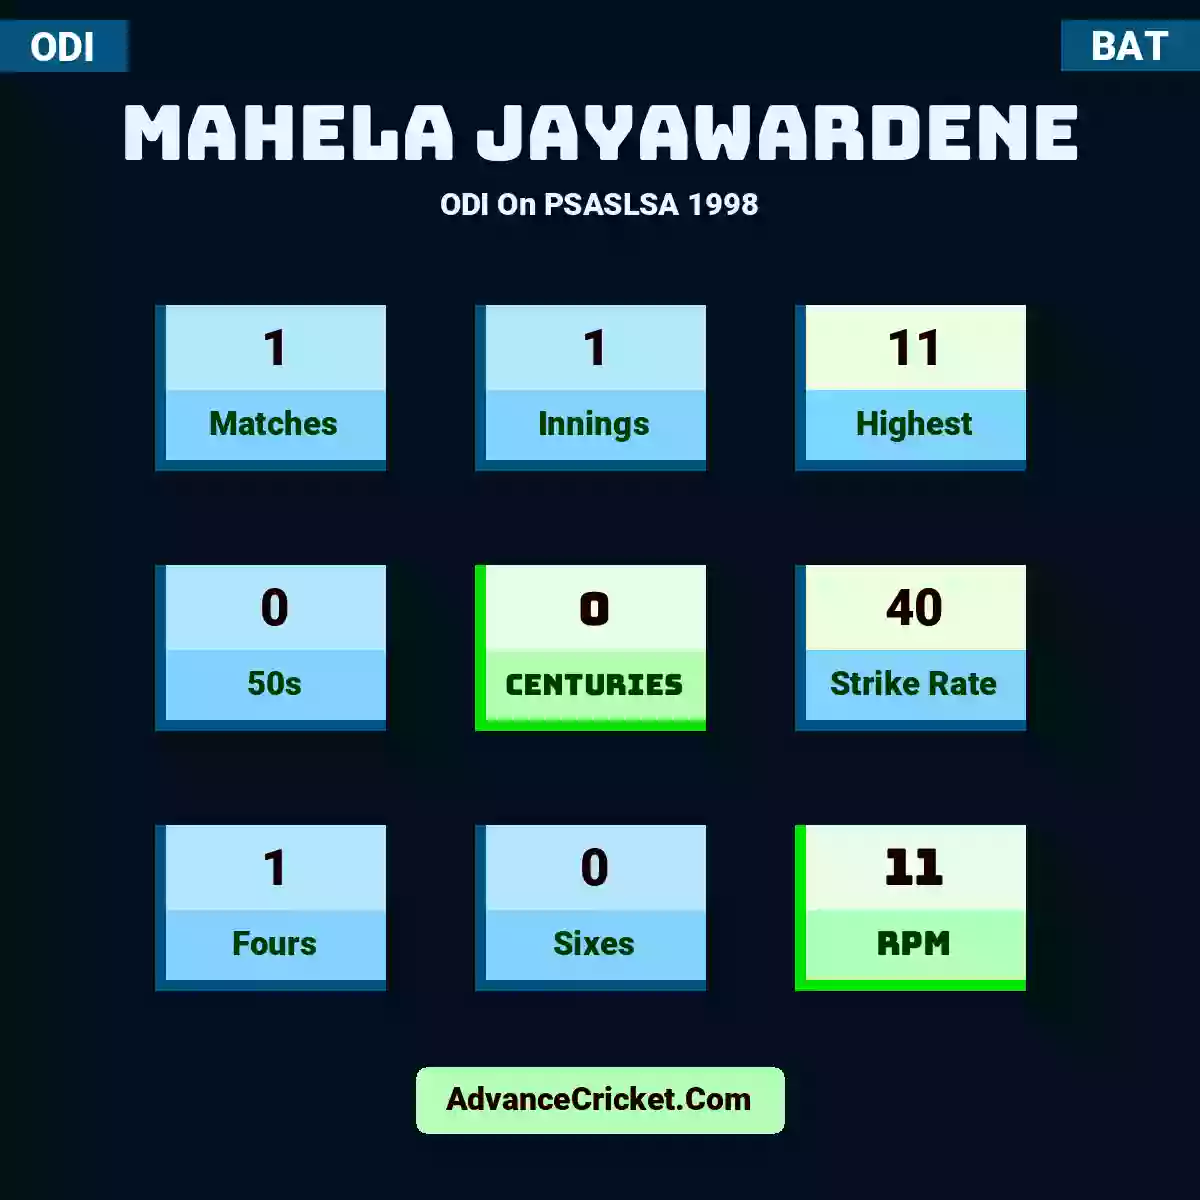 Mahela Jayawardene ODI  On PSASLSA 1998, Mahela Jayawardene played 1 matches, scored 11 runs as highest, 0 half-centuries, and 0 centuries, with a strike rate of 40. M.Jayawardene hit 1 fours and 0 sixes, with an RPM of 11.